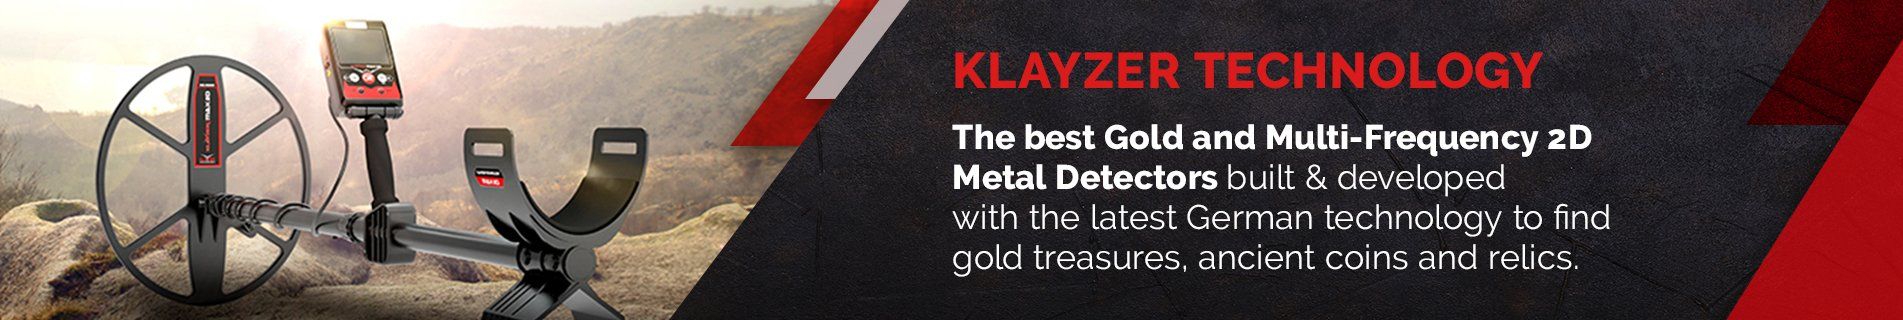 Klayzer Technology Metal Detector